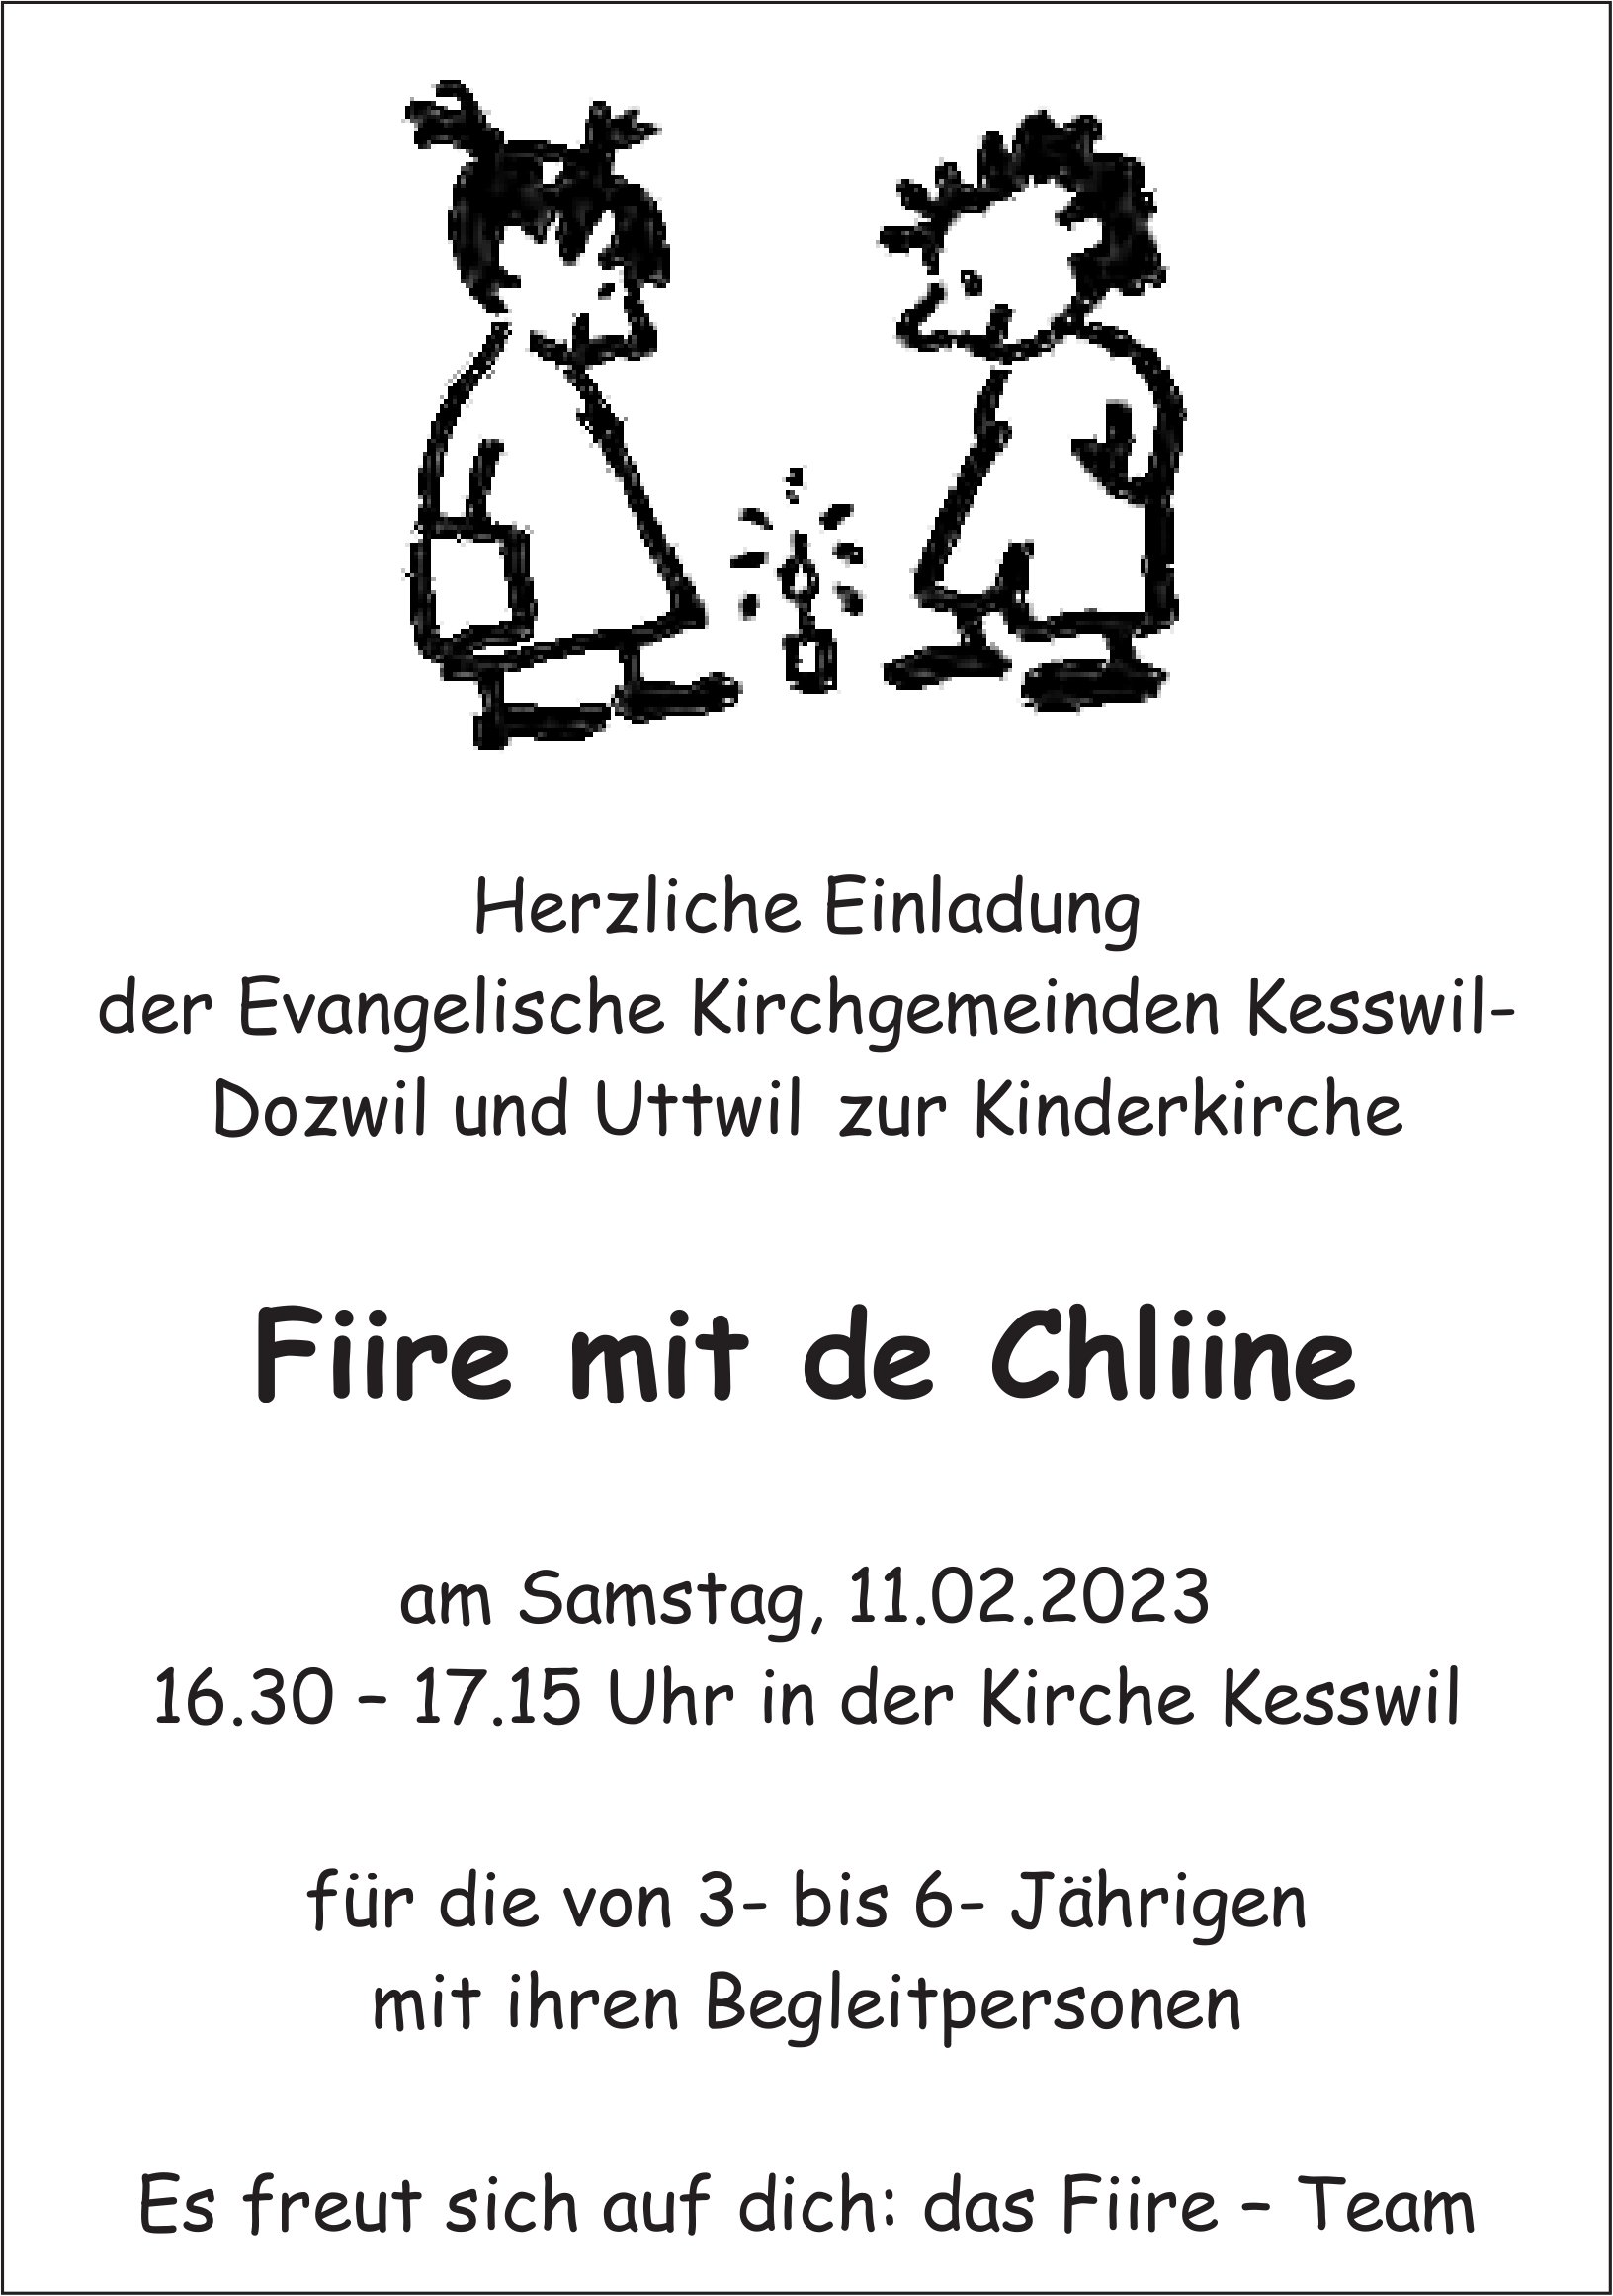 Fiire mit de Chliine, 11. Februar, Dozwil